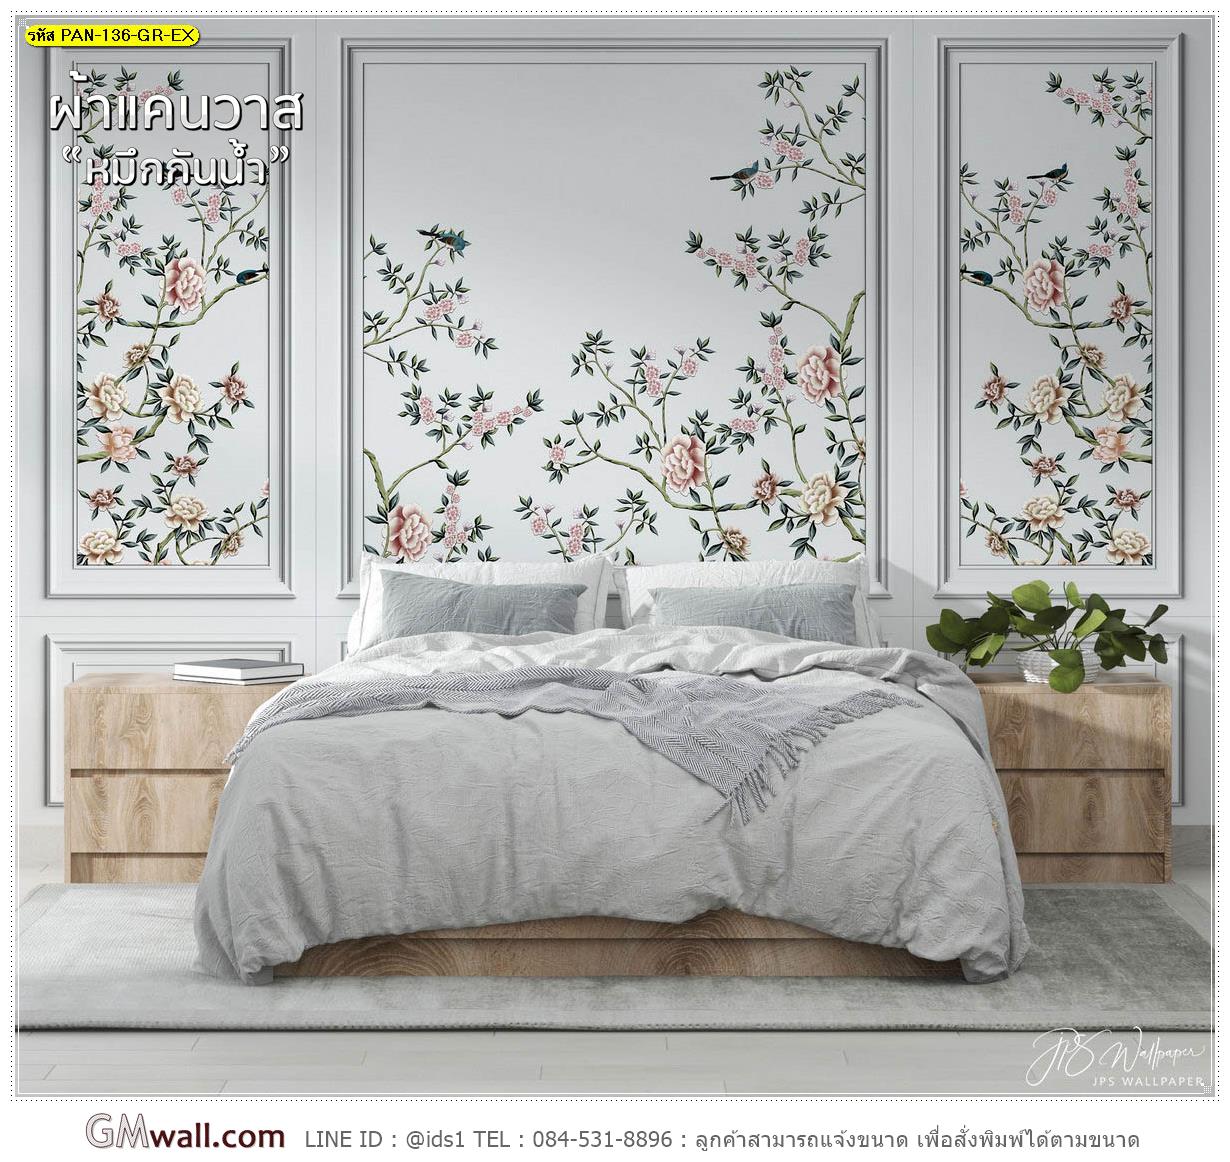 Flower wallpaper minimal style